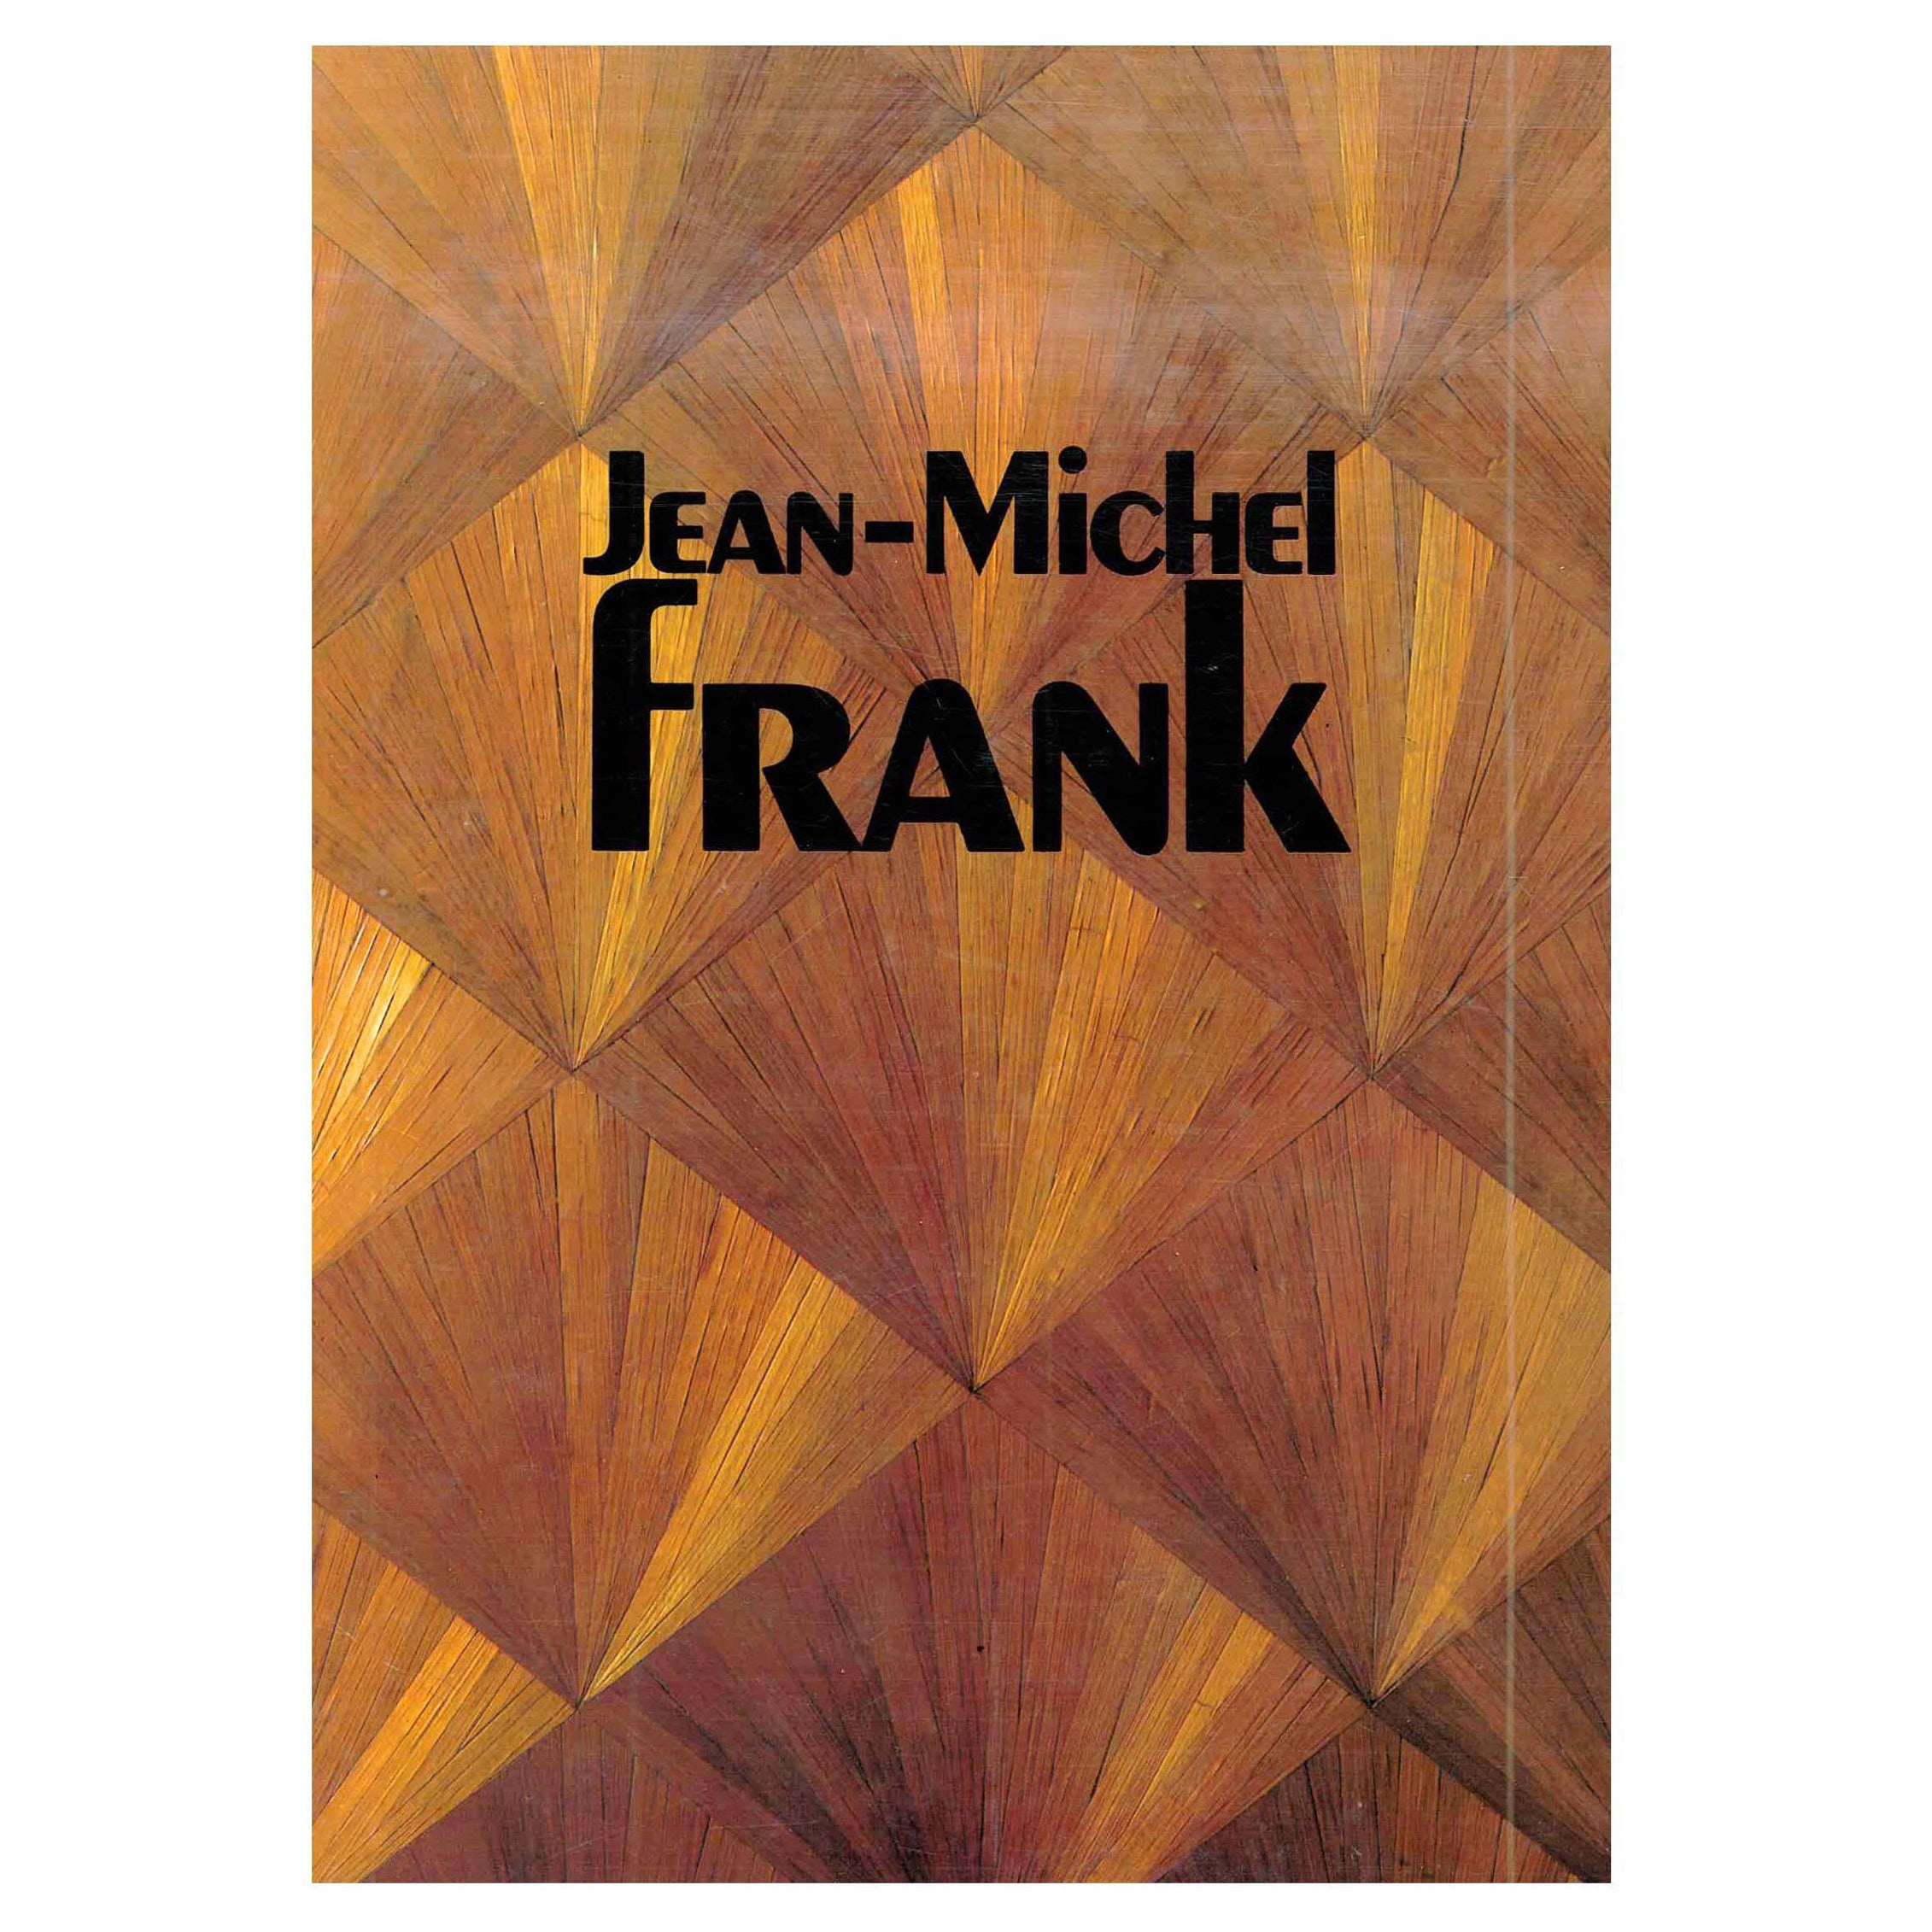 Jean-Michel Frank by Leopald Diego Sanchez (Book)